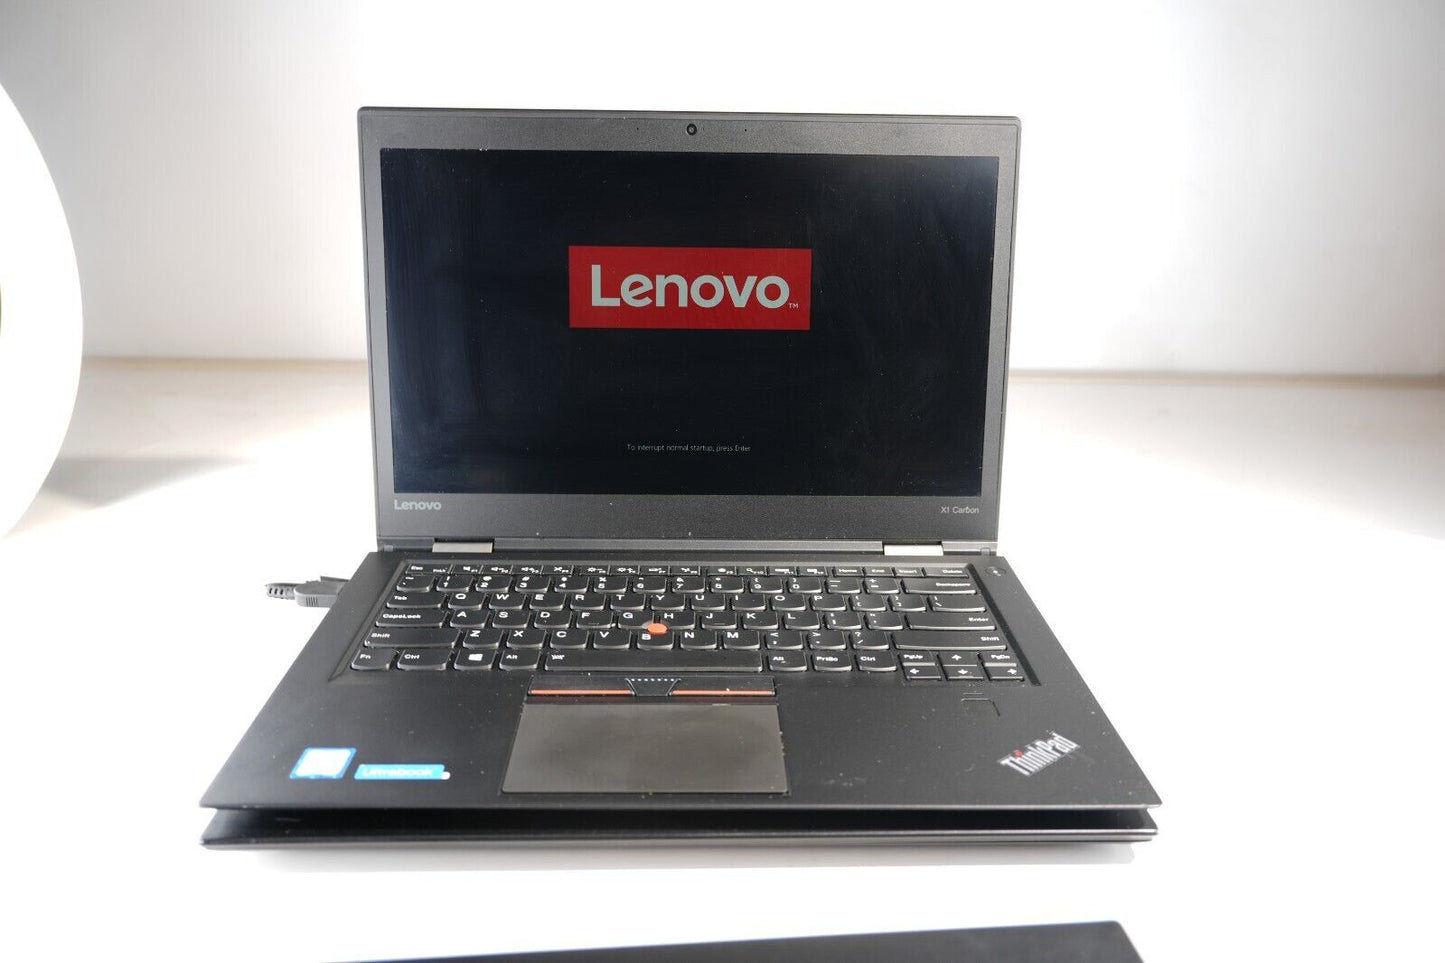 Lot of 5 Lenovo X1 Carbon, ThinkPad T460s Intel(R)Core(TM)-i7 2.6GHz Read Desc🔥